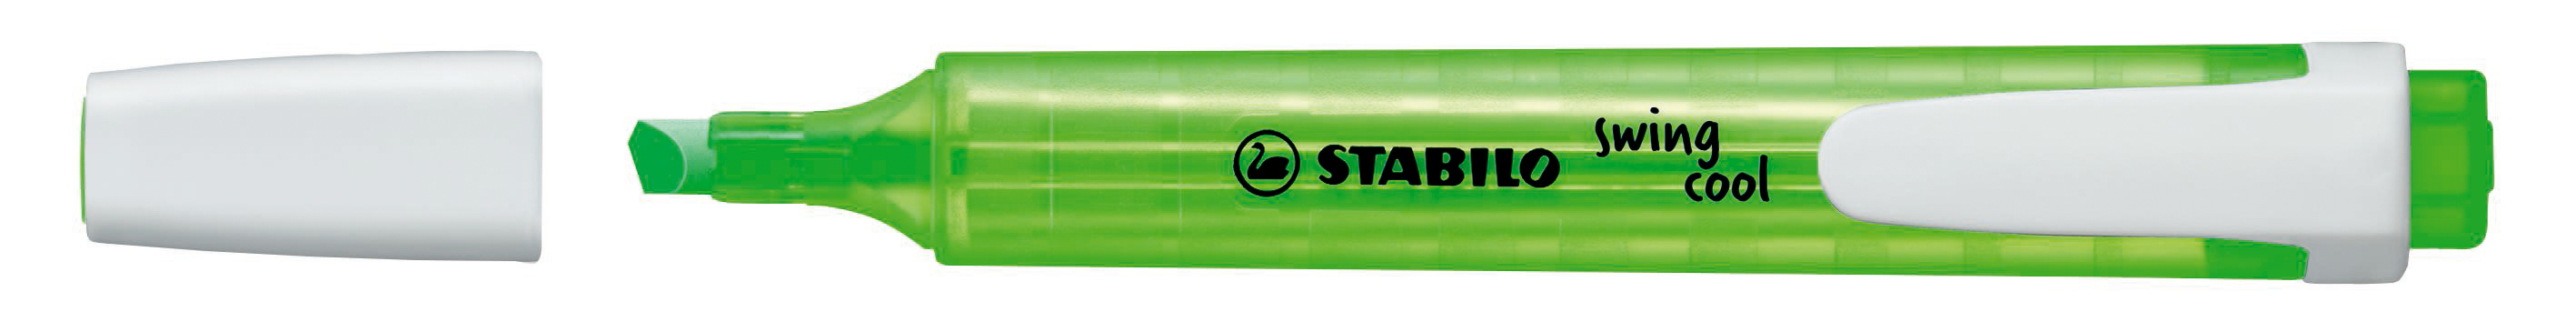 STABILO Textmarker Swing Cool grün<br>